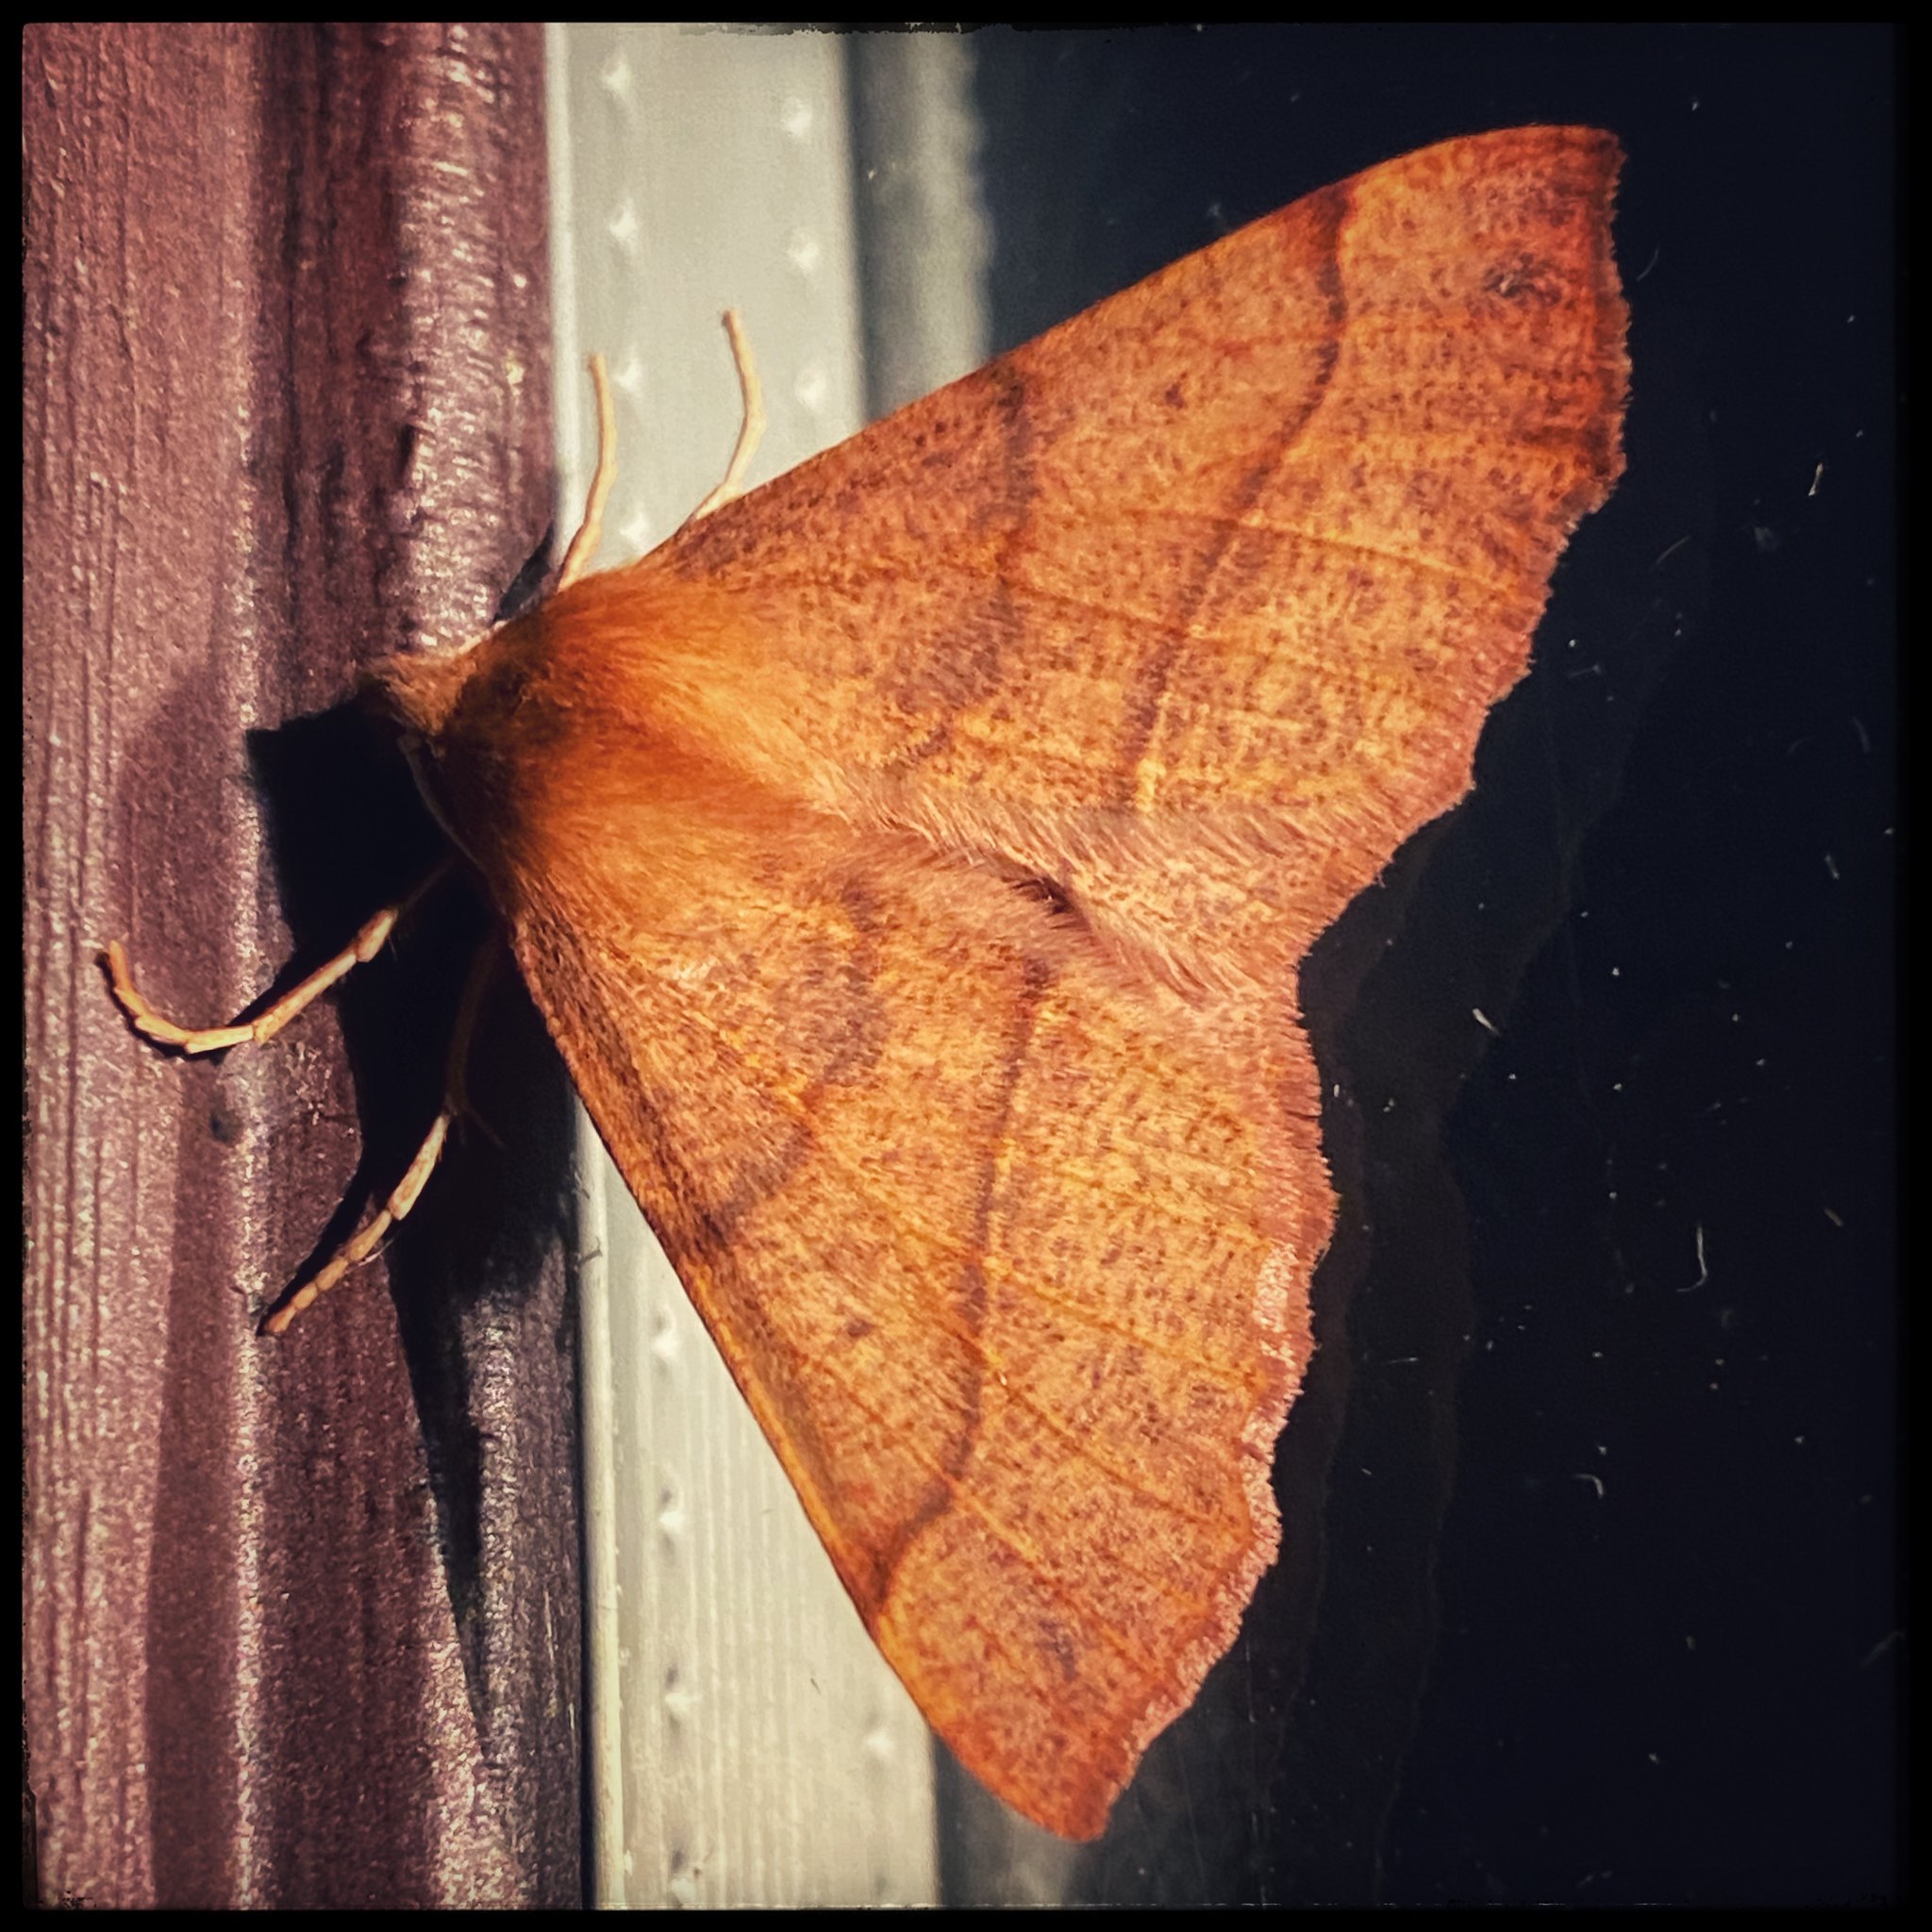 moth on the window